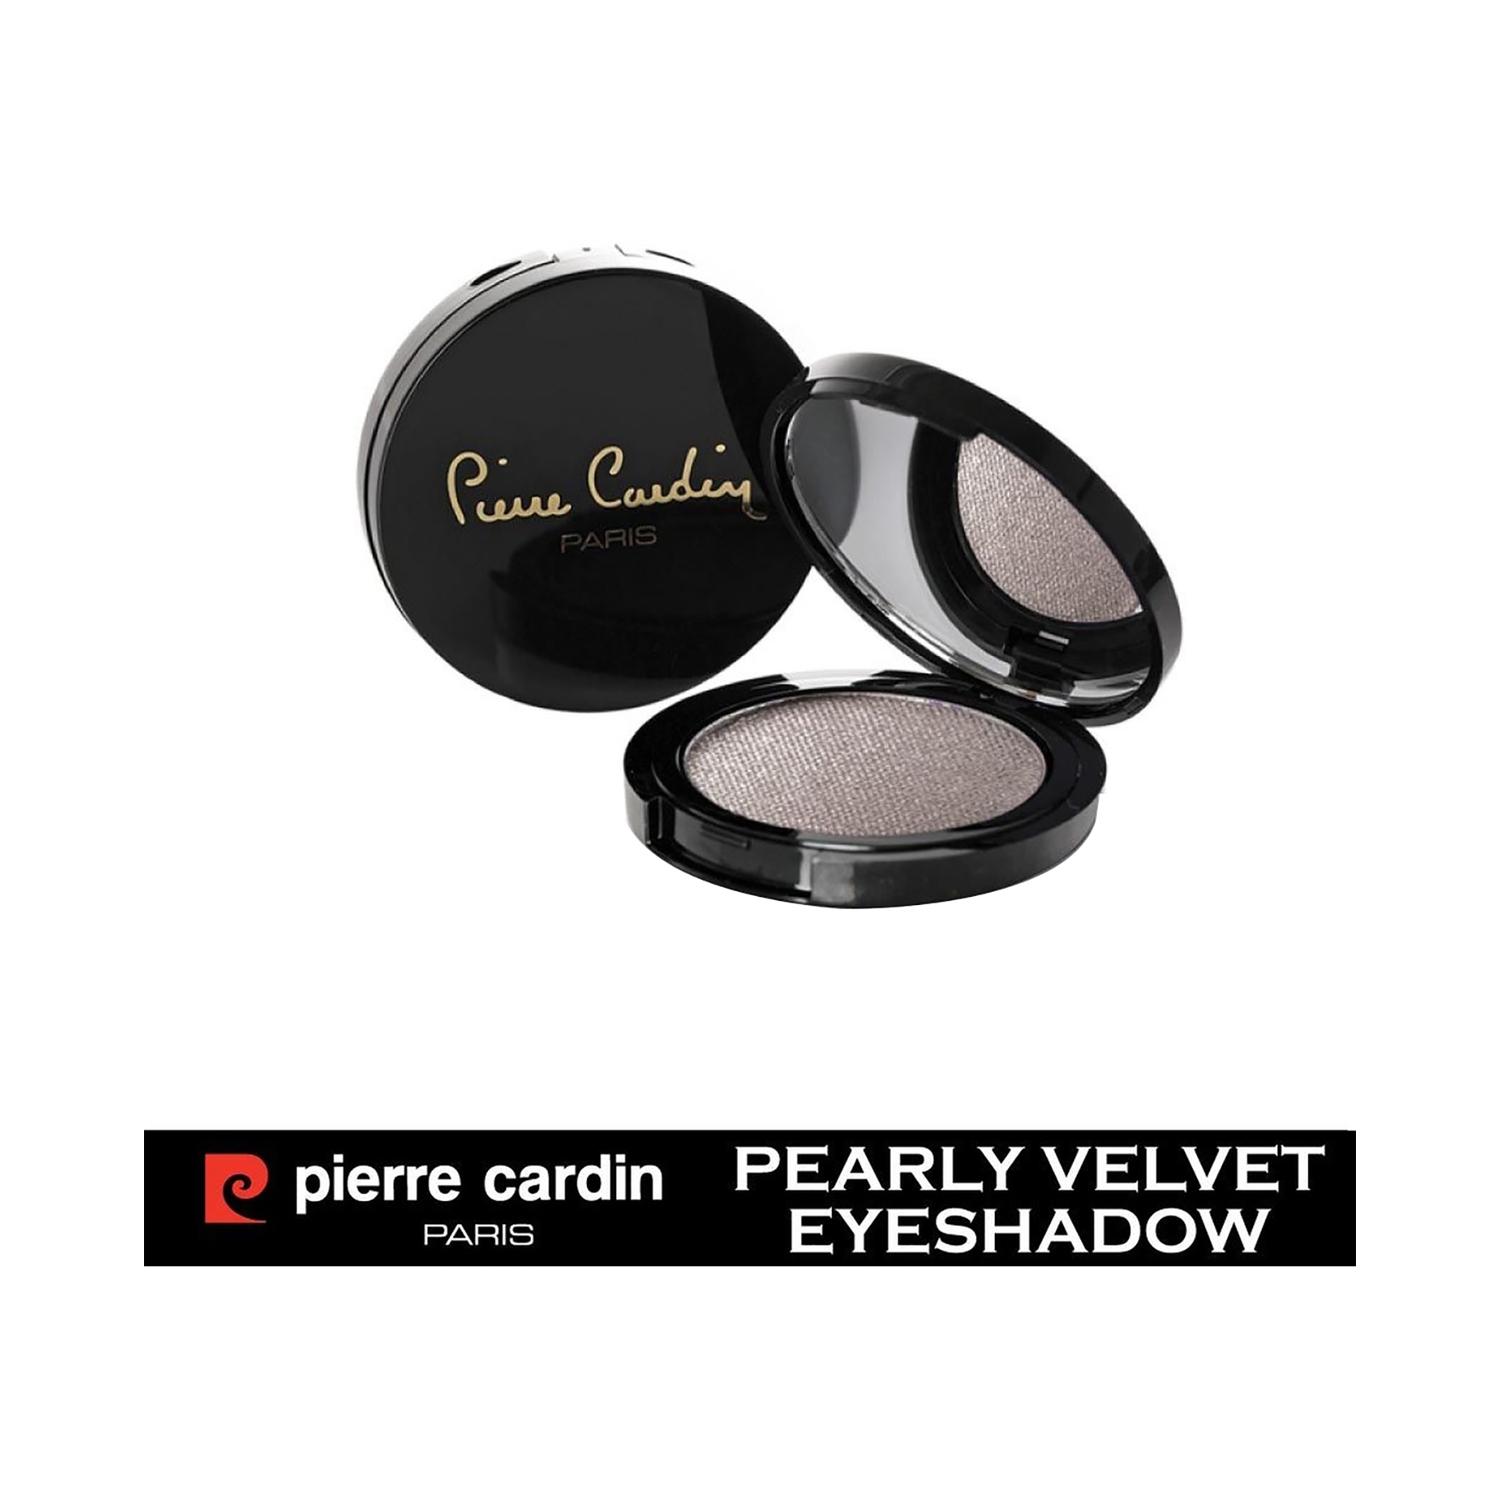 Pierre Cardin Paris Pearly Velvet Eye Shadow - 275 Mocha Brown (4g)